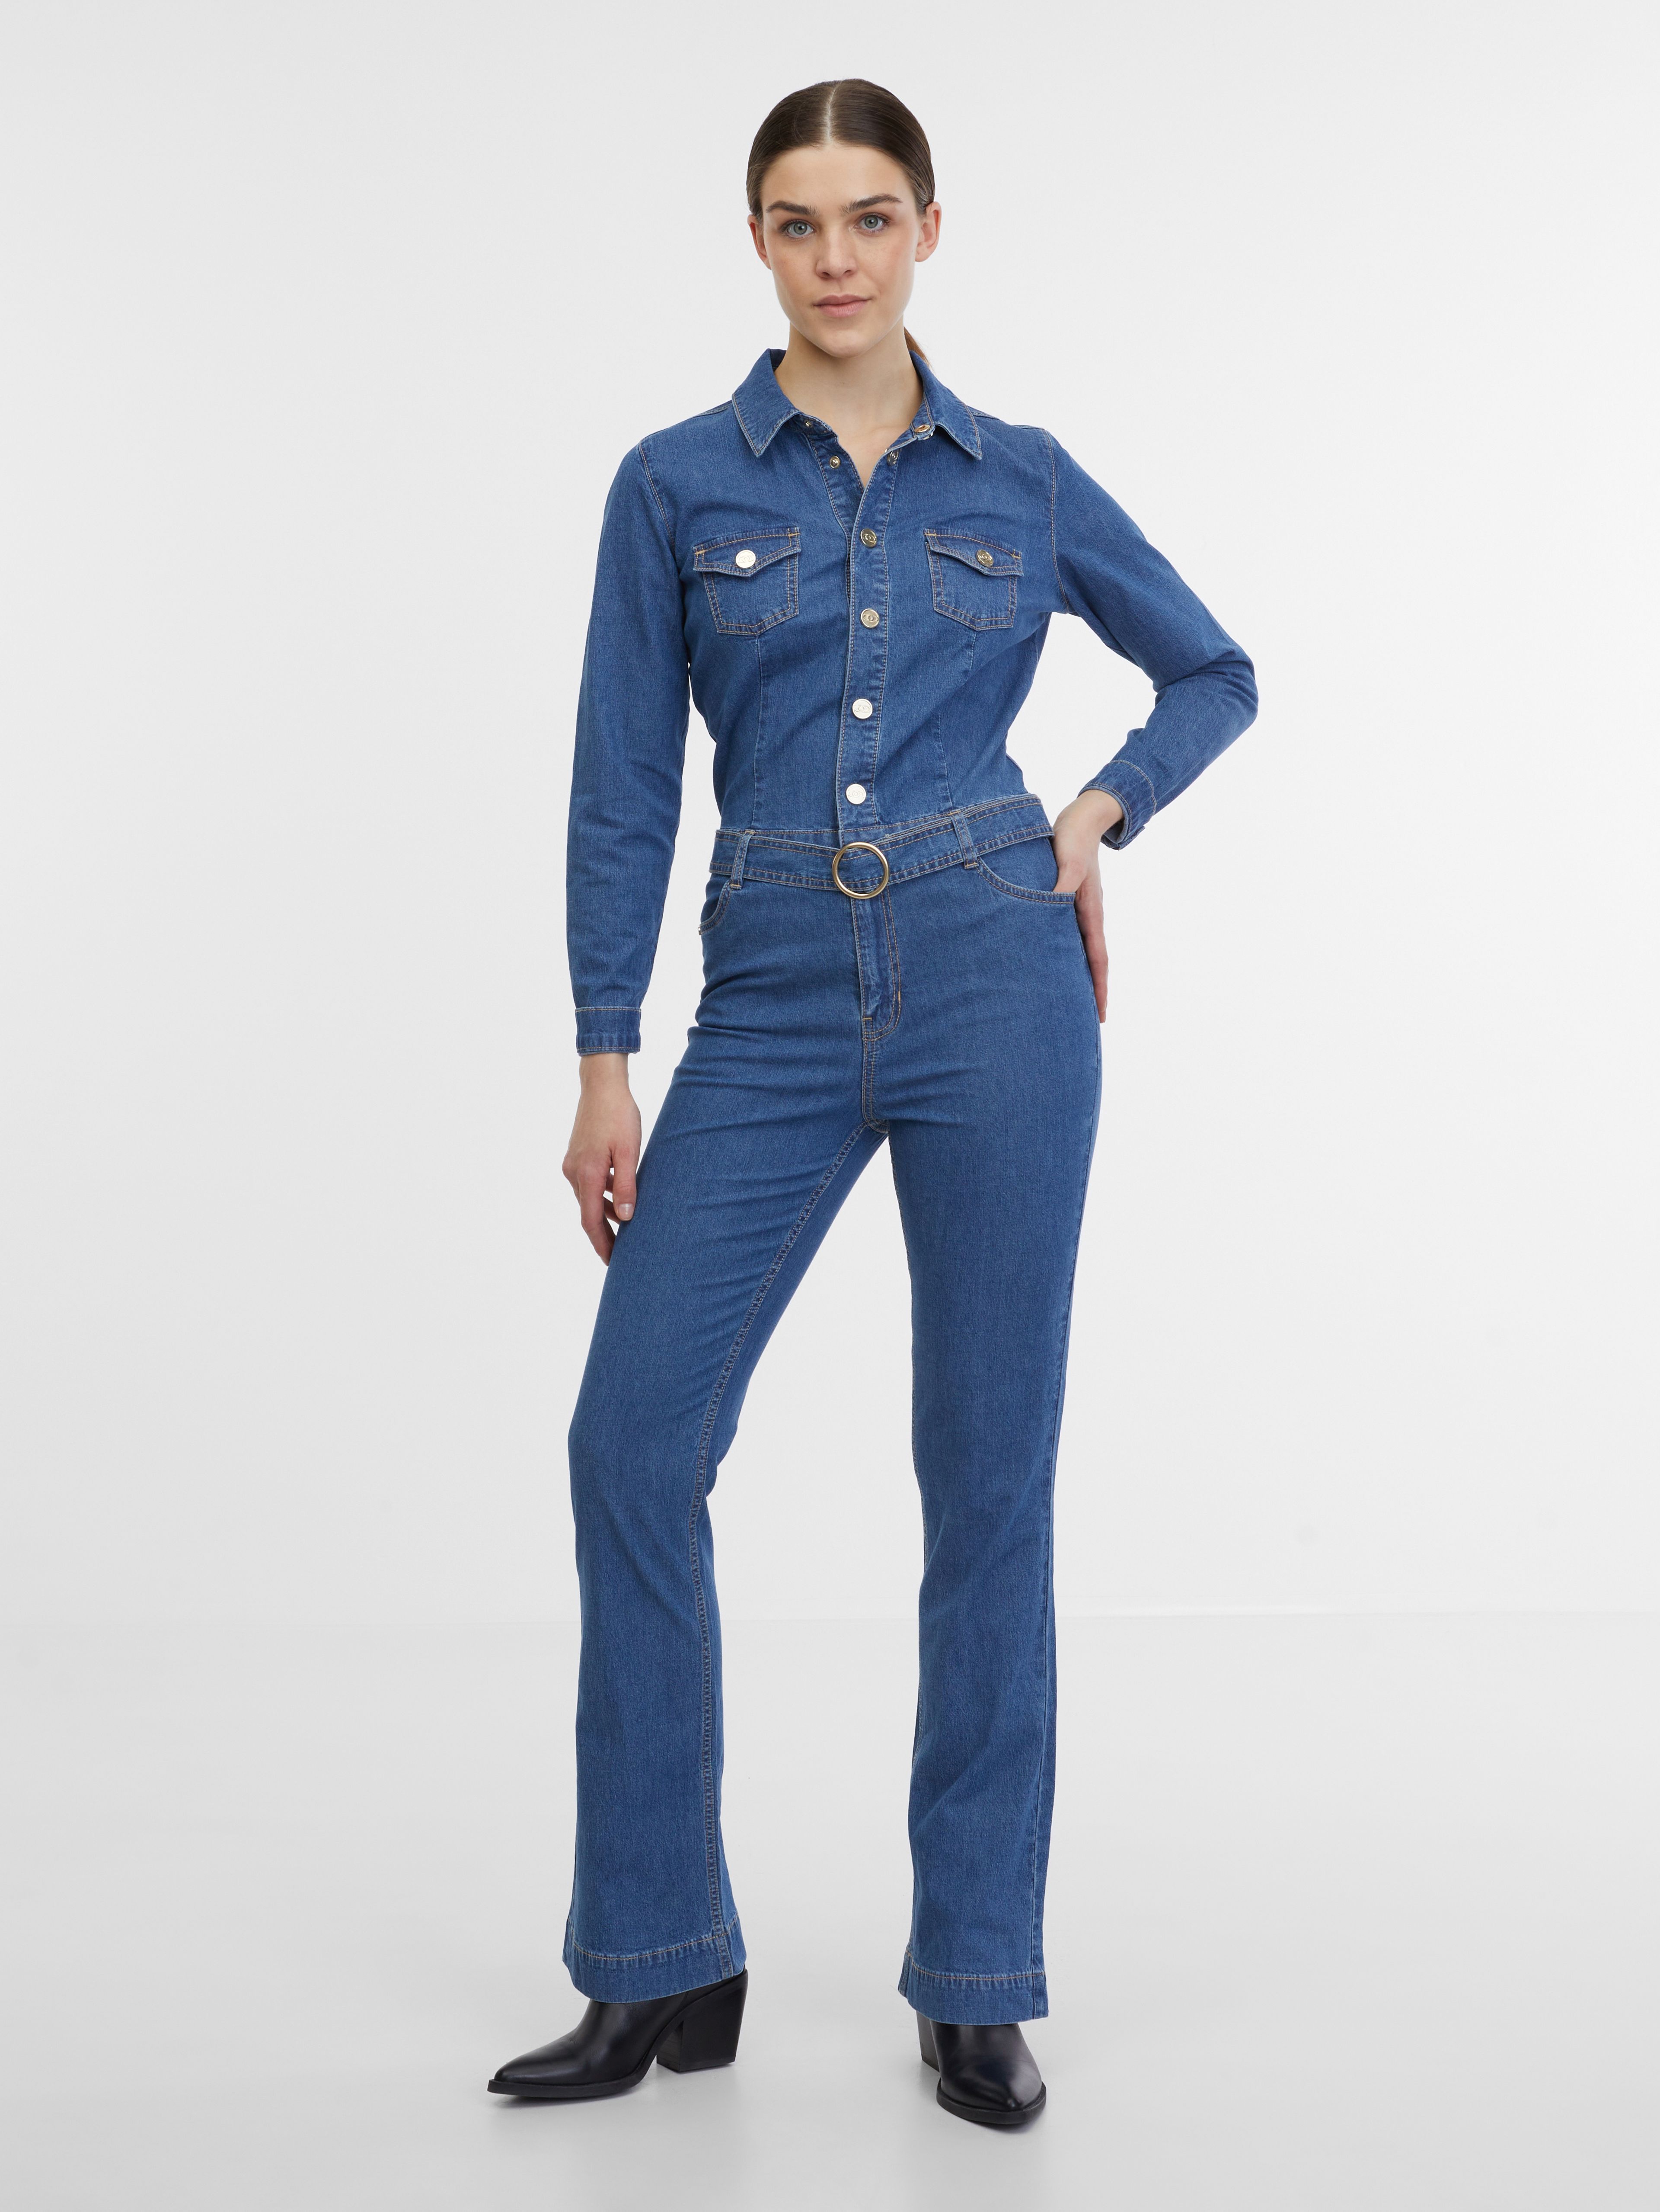 Blauer Jeans-Overall Damen ORSAY